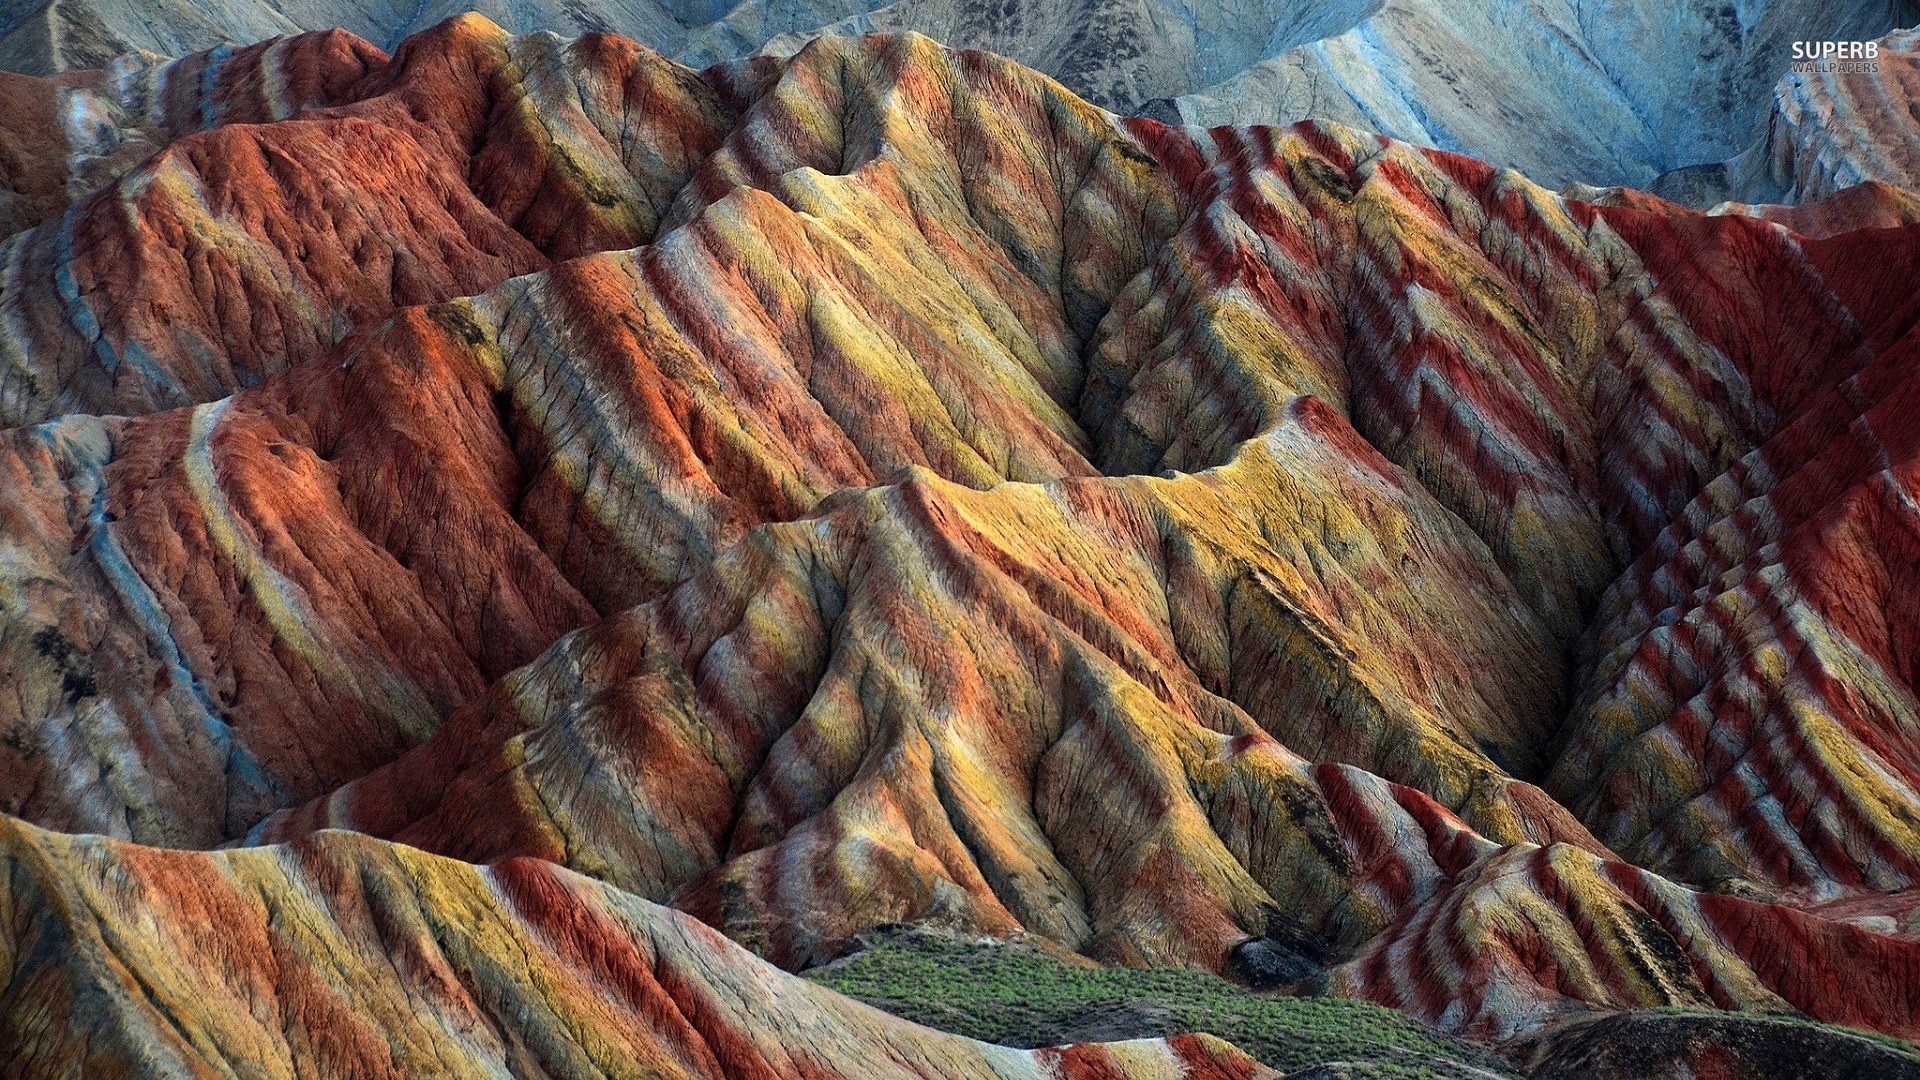 General 1920x1080 landscape nature mountains rocks texture rock formation